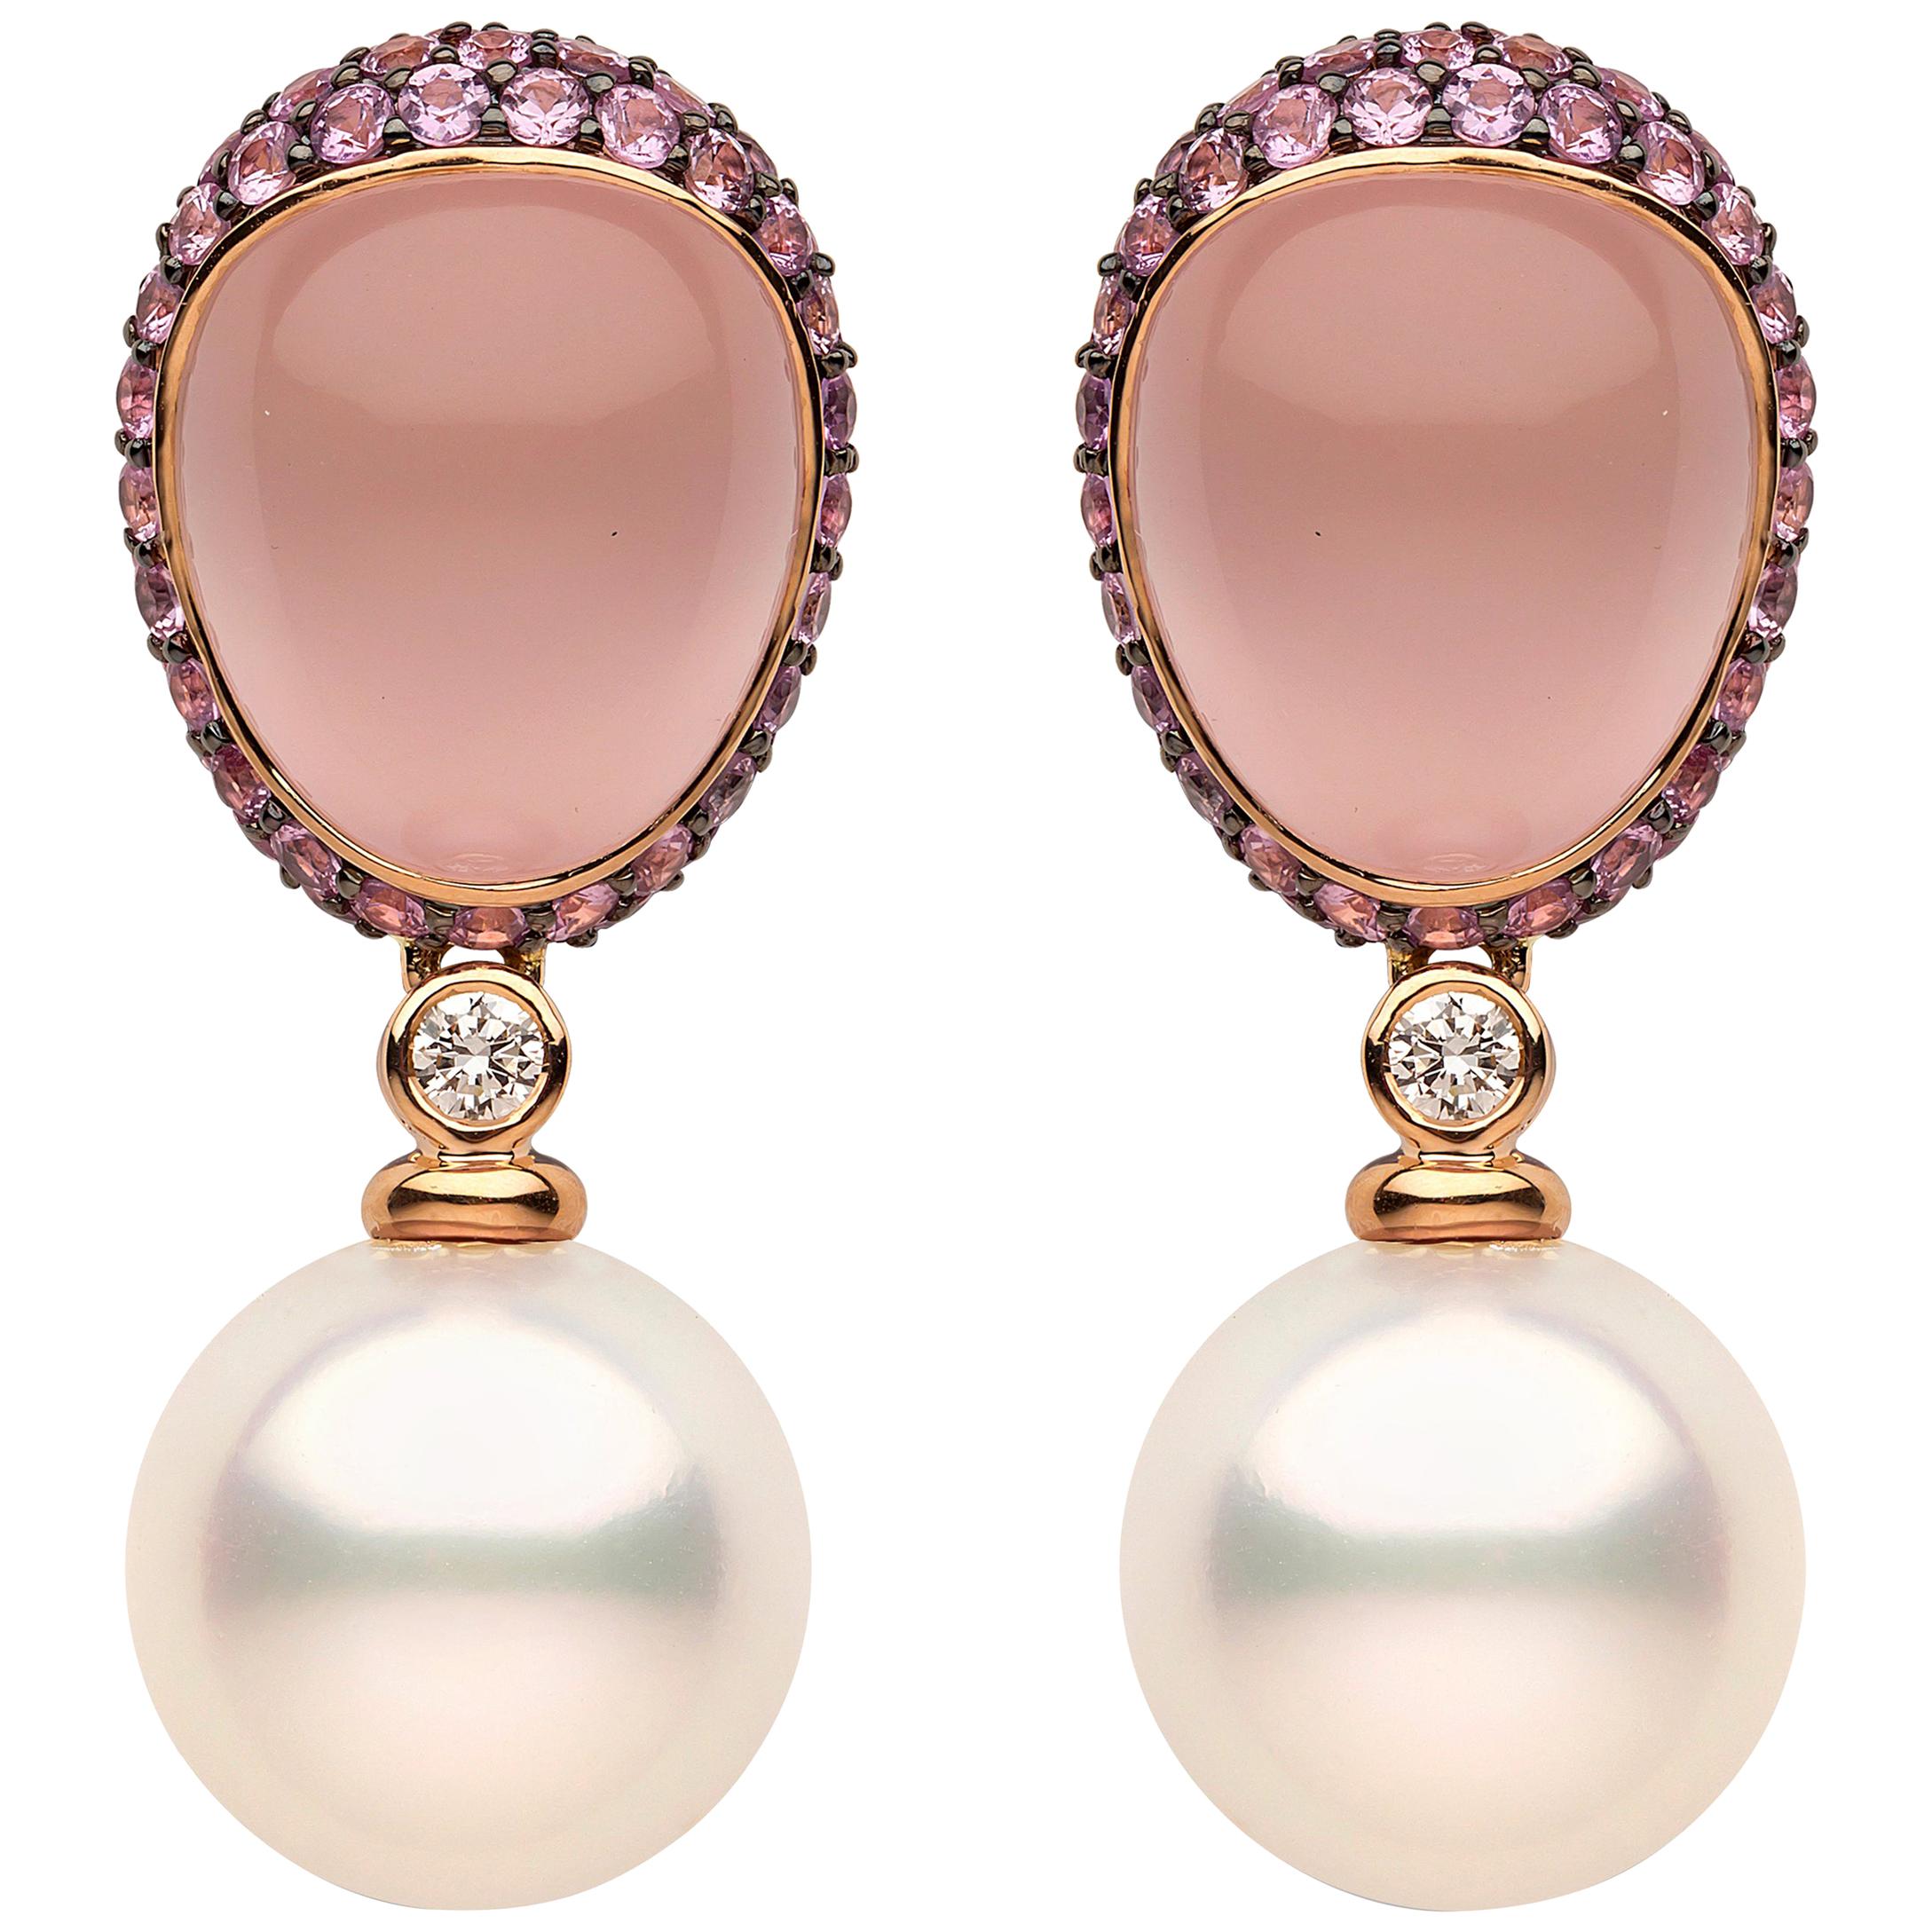 Yoko London South Sea Pearl, Quartz, Sapphire & Diamond Earrings in 18K Gold